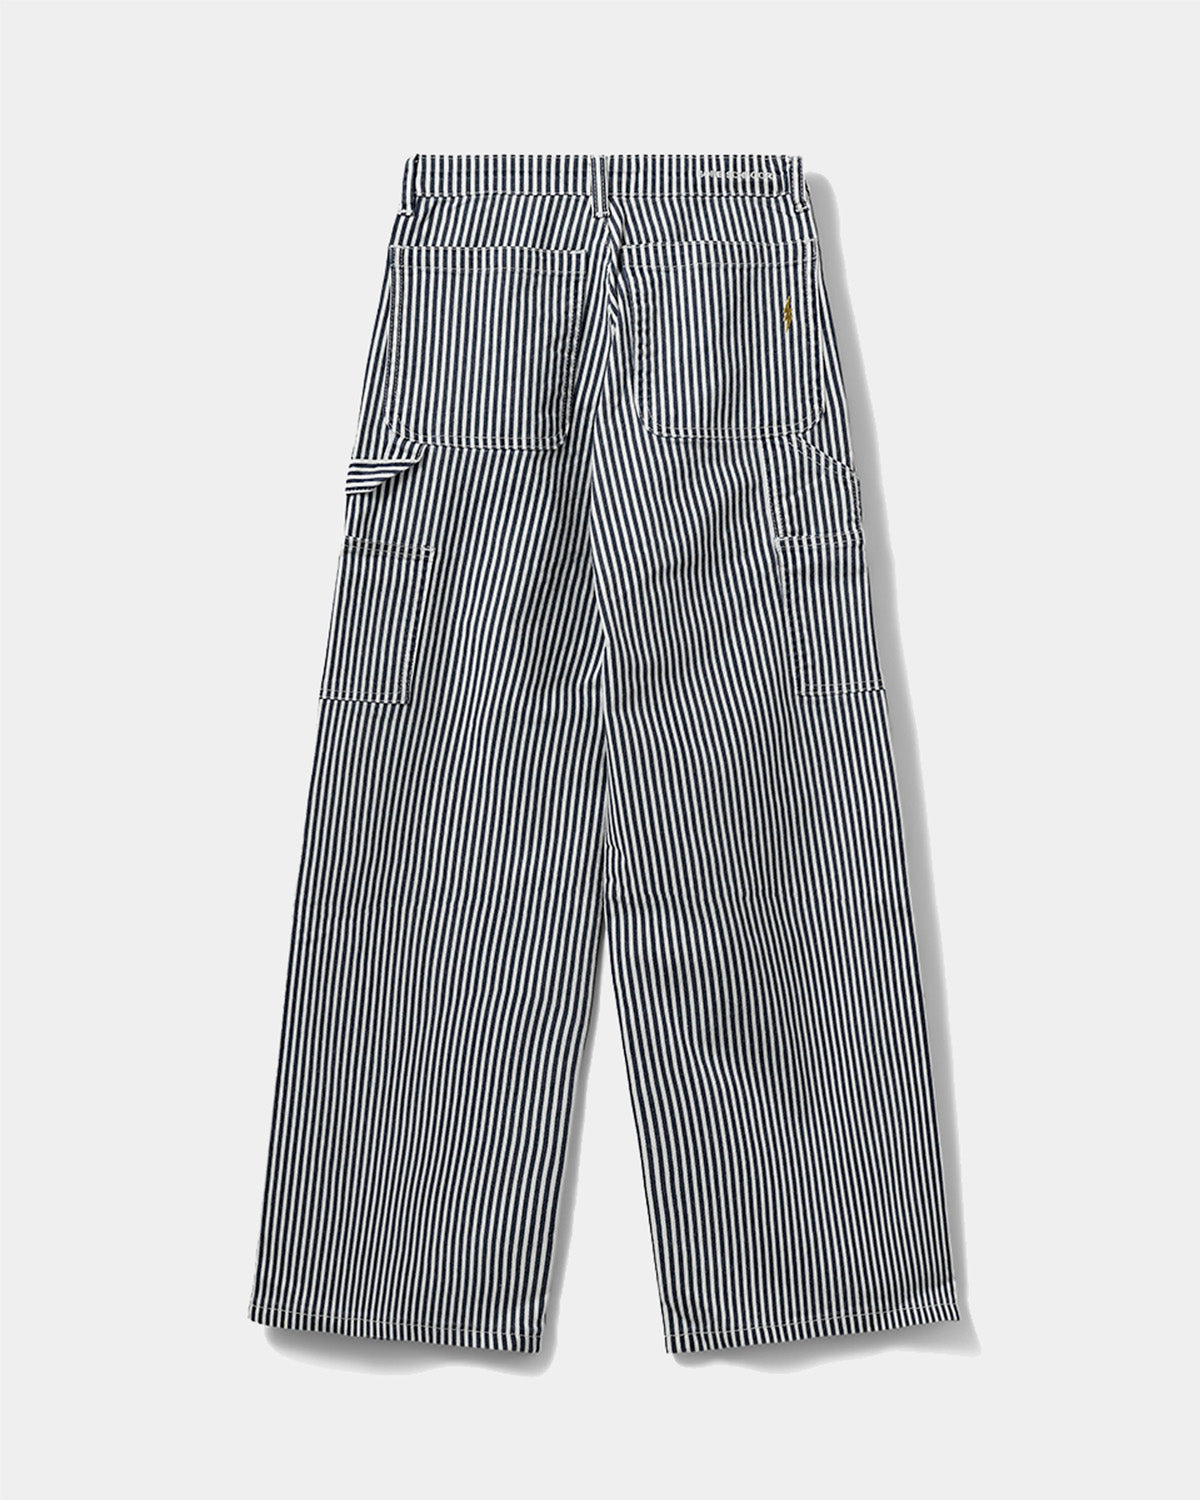 GNOS228-Trousers-Dark Blue striped